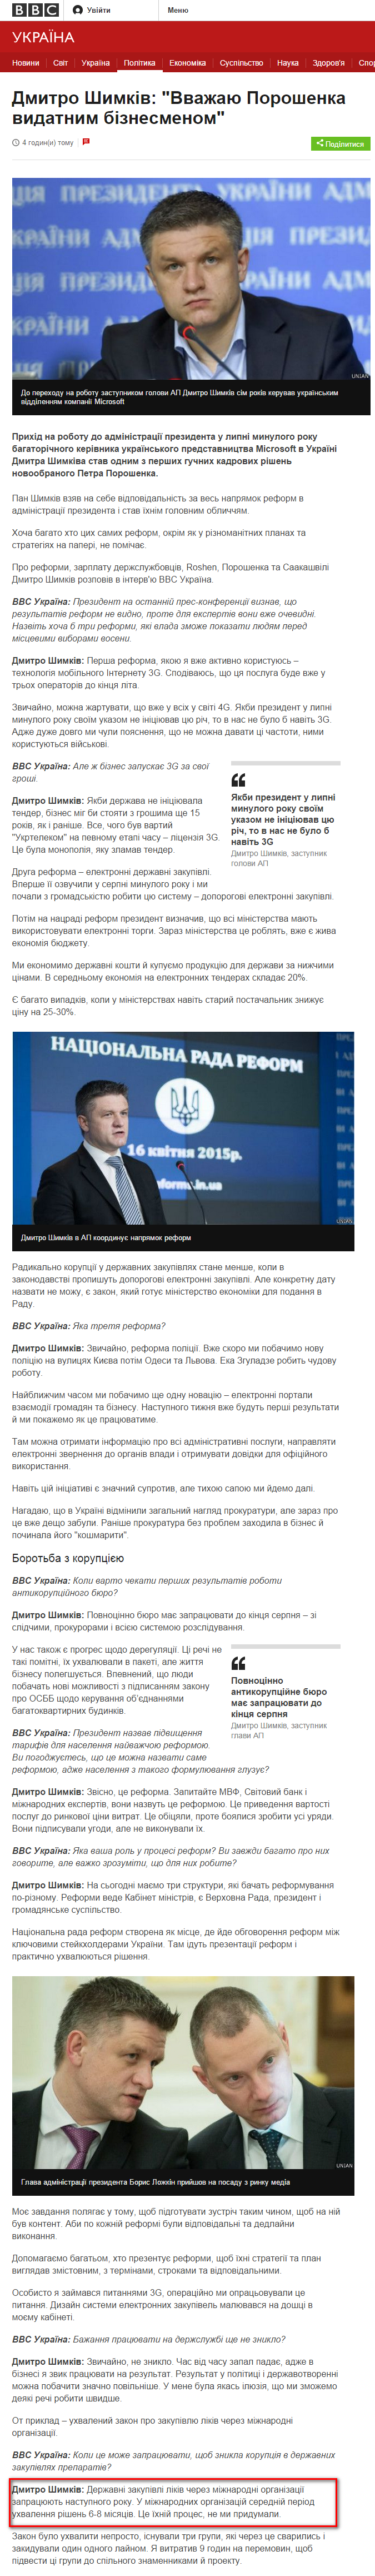 http://www.bbc.com/ukrainian/politics/2015/06/150612_dmytro_shymkiv_vc?ocid=socialflow_twitter